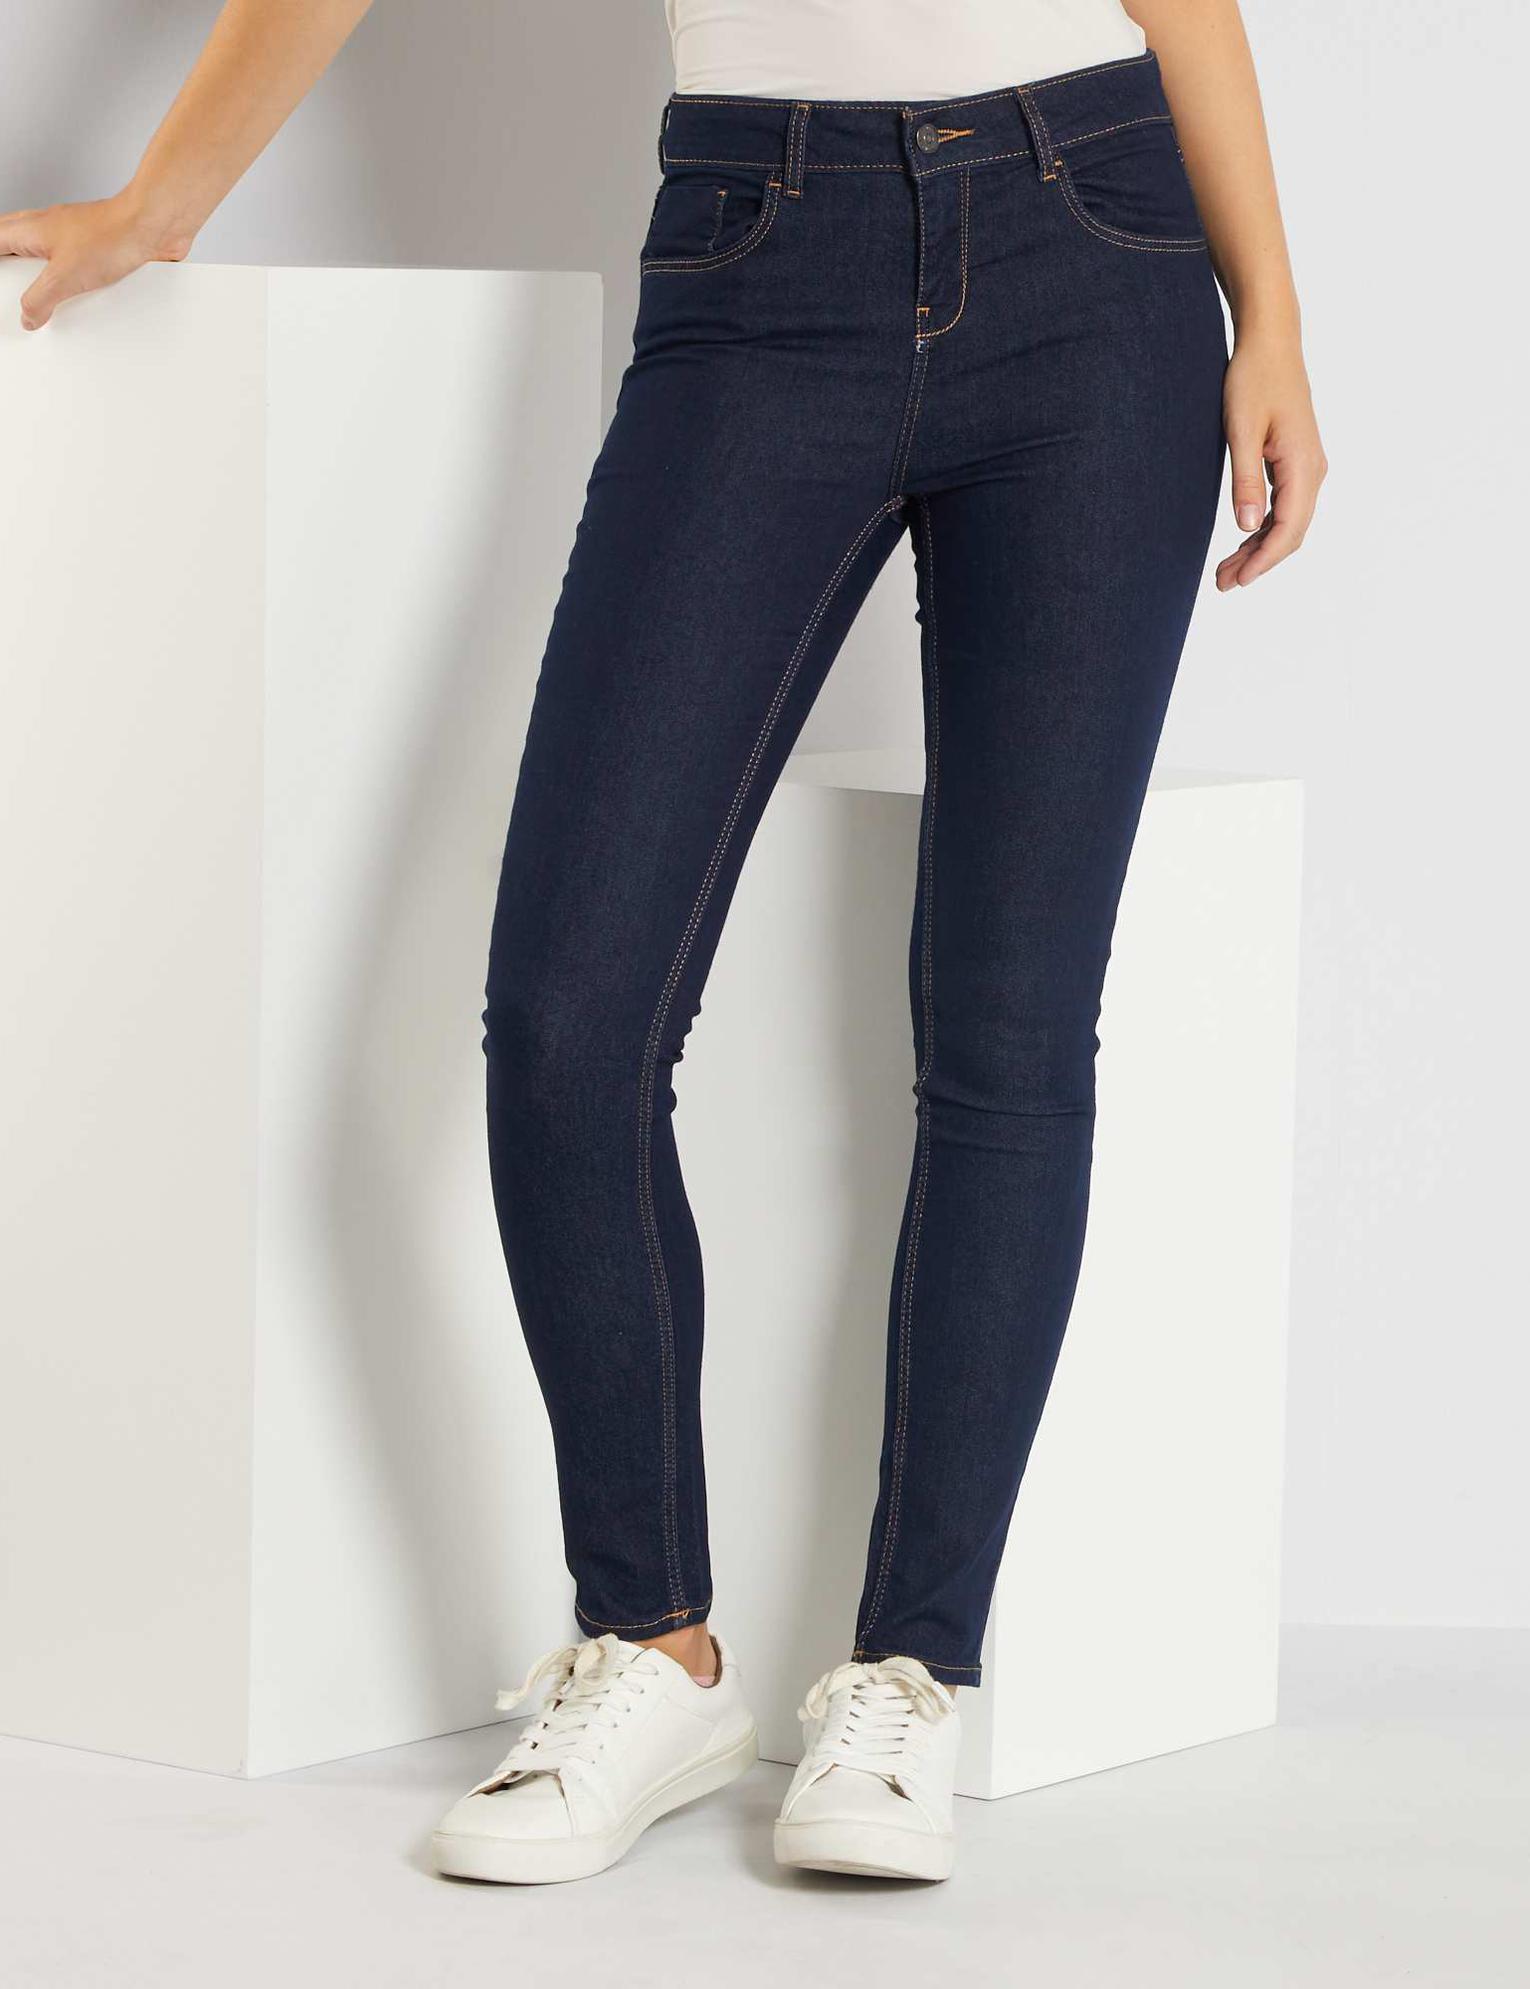 ankle jeans design